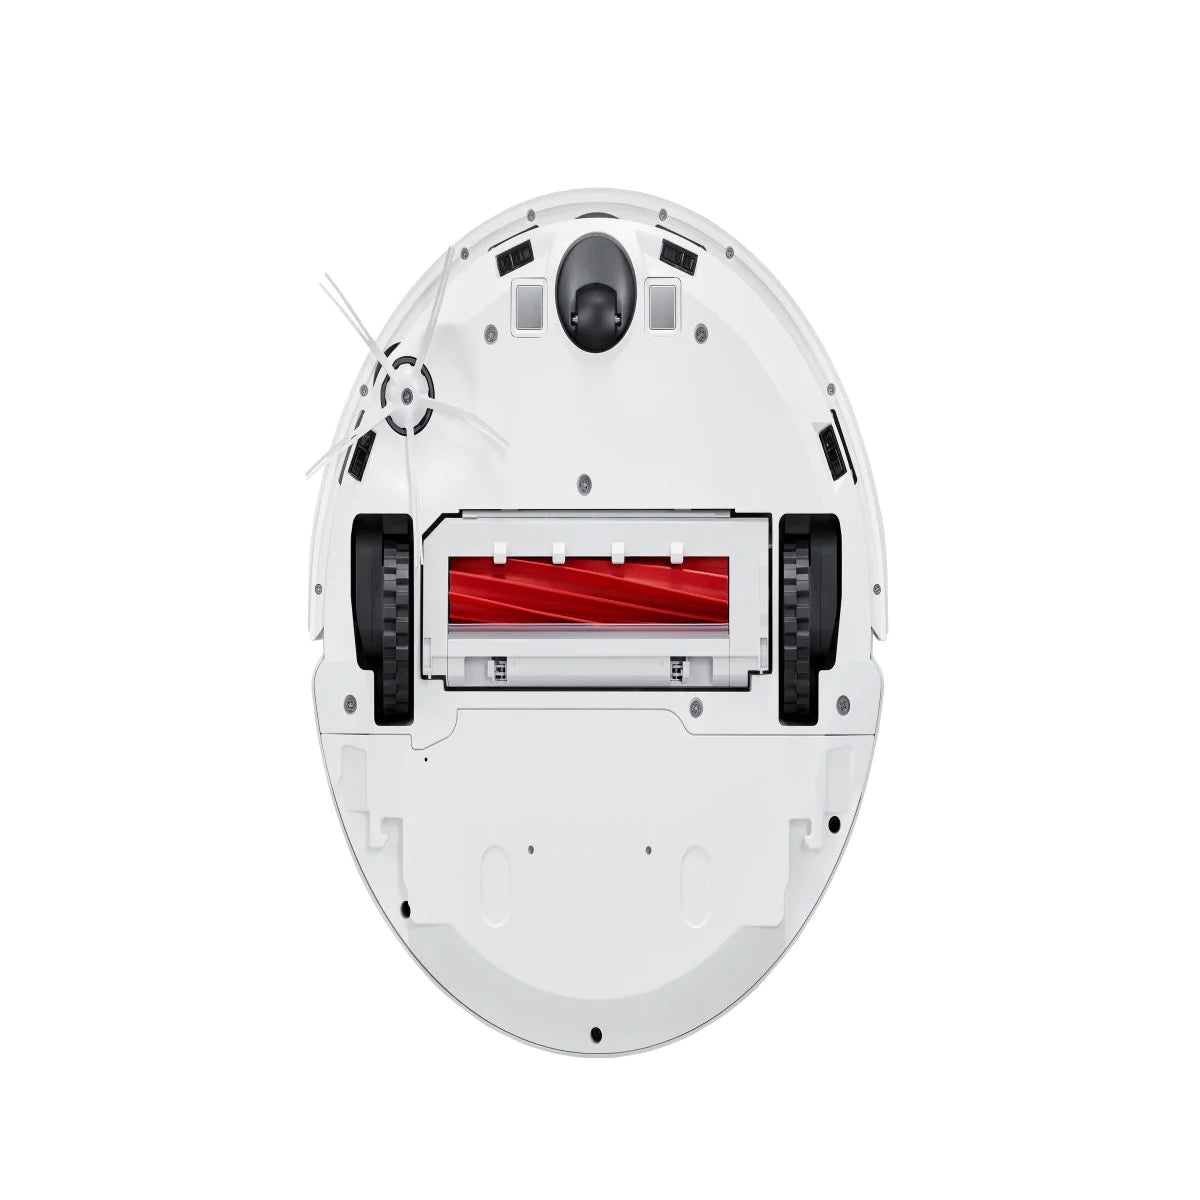 Aspirador Robótico Roborock Q7 MAX - 4200Pa Bateria 5200mAh 180 Minutos Autonomia - Branco